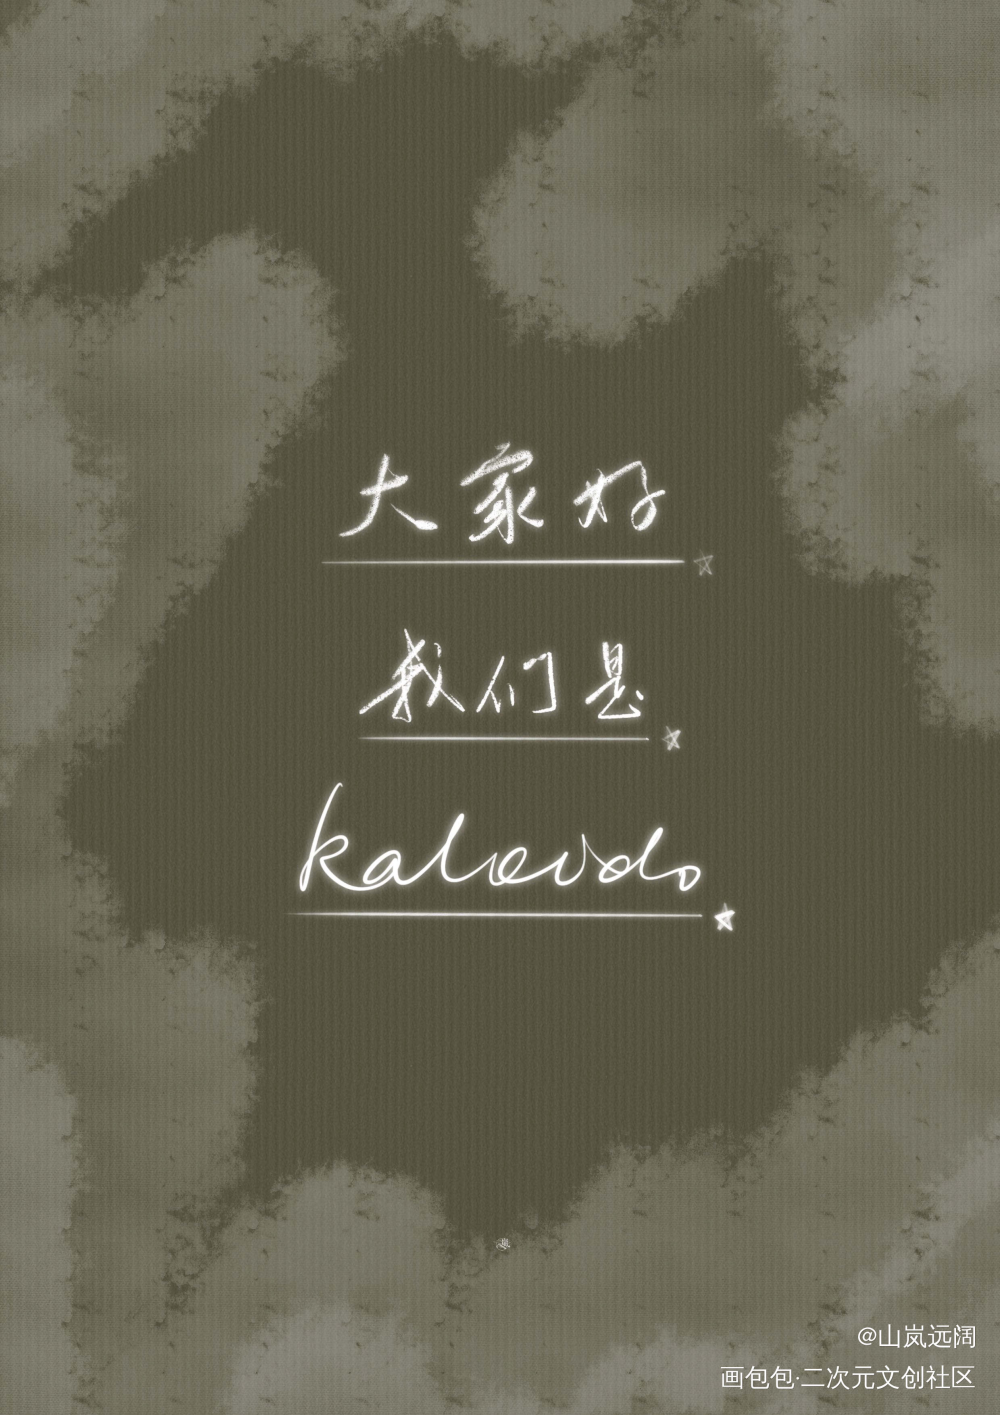 kaleido_营业悖论kaleido字体设计稚楚板写绘画作品